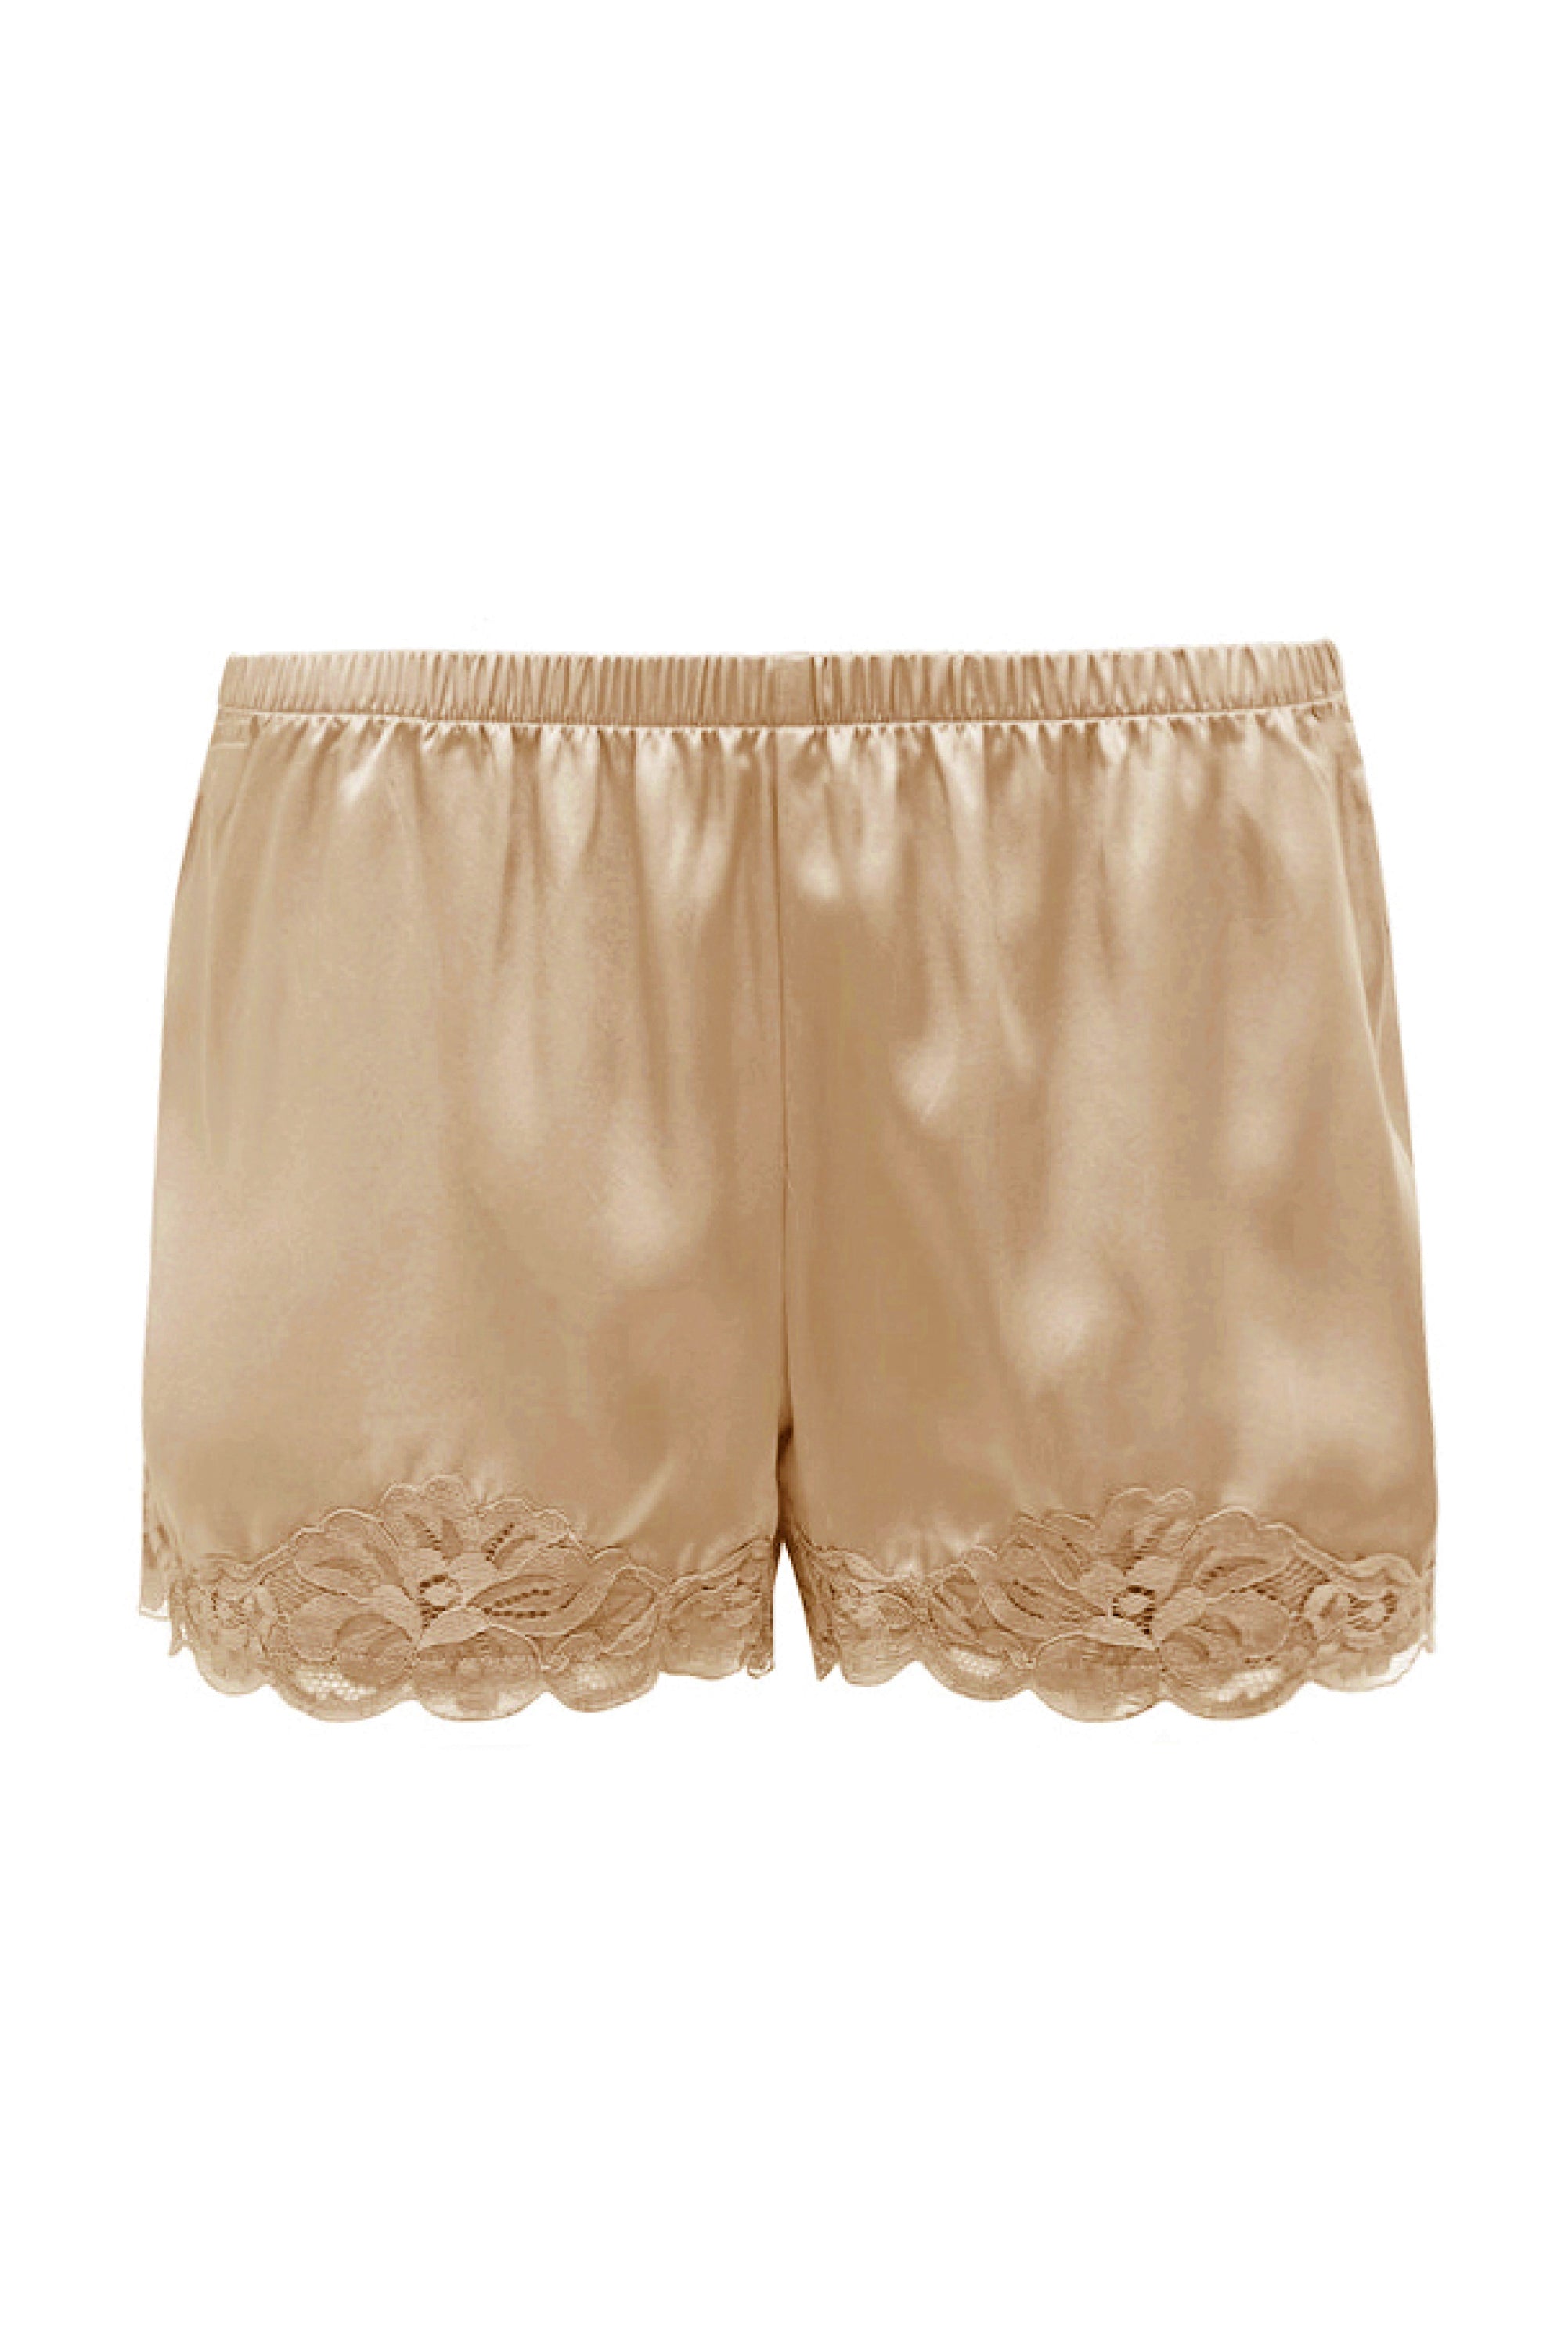 Gold Hawk floral-print silk shorts - Neutrals